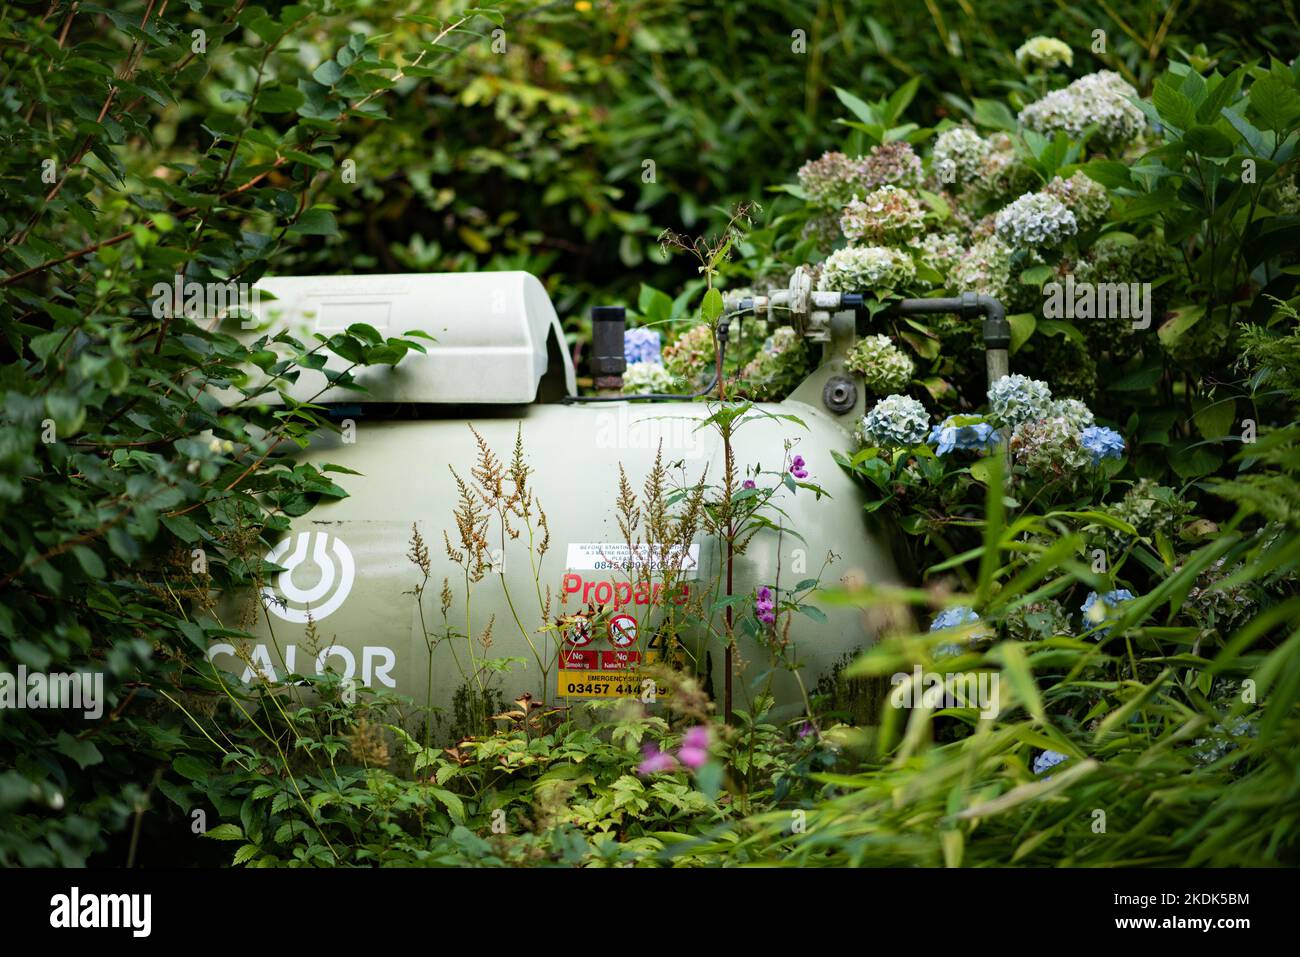 Un tanque de gas Calor en un jardín, Chipping, Preston, Lancashire. Foto de stock